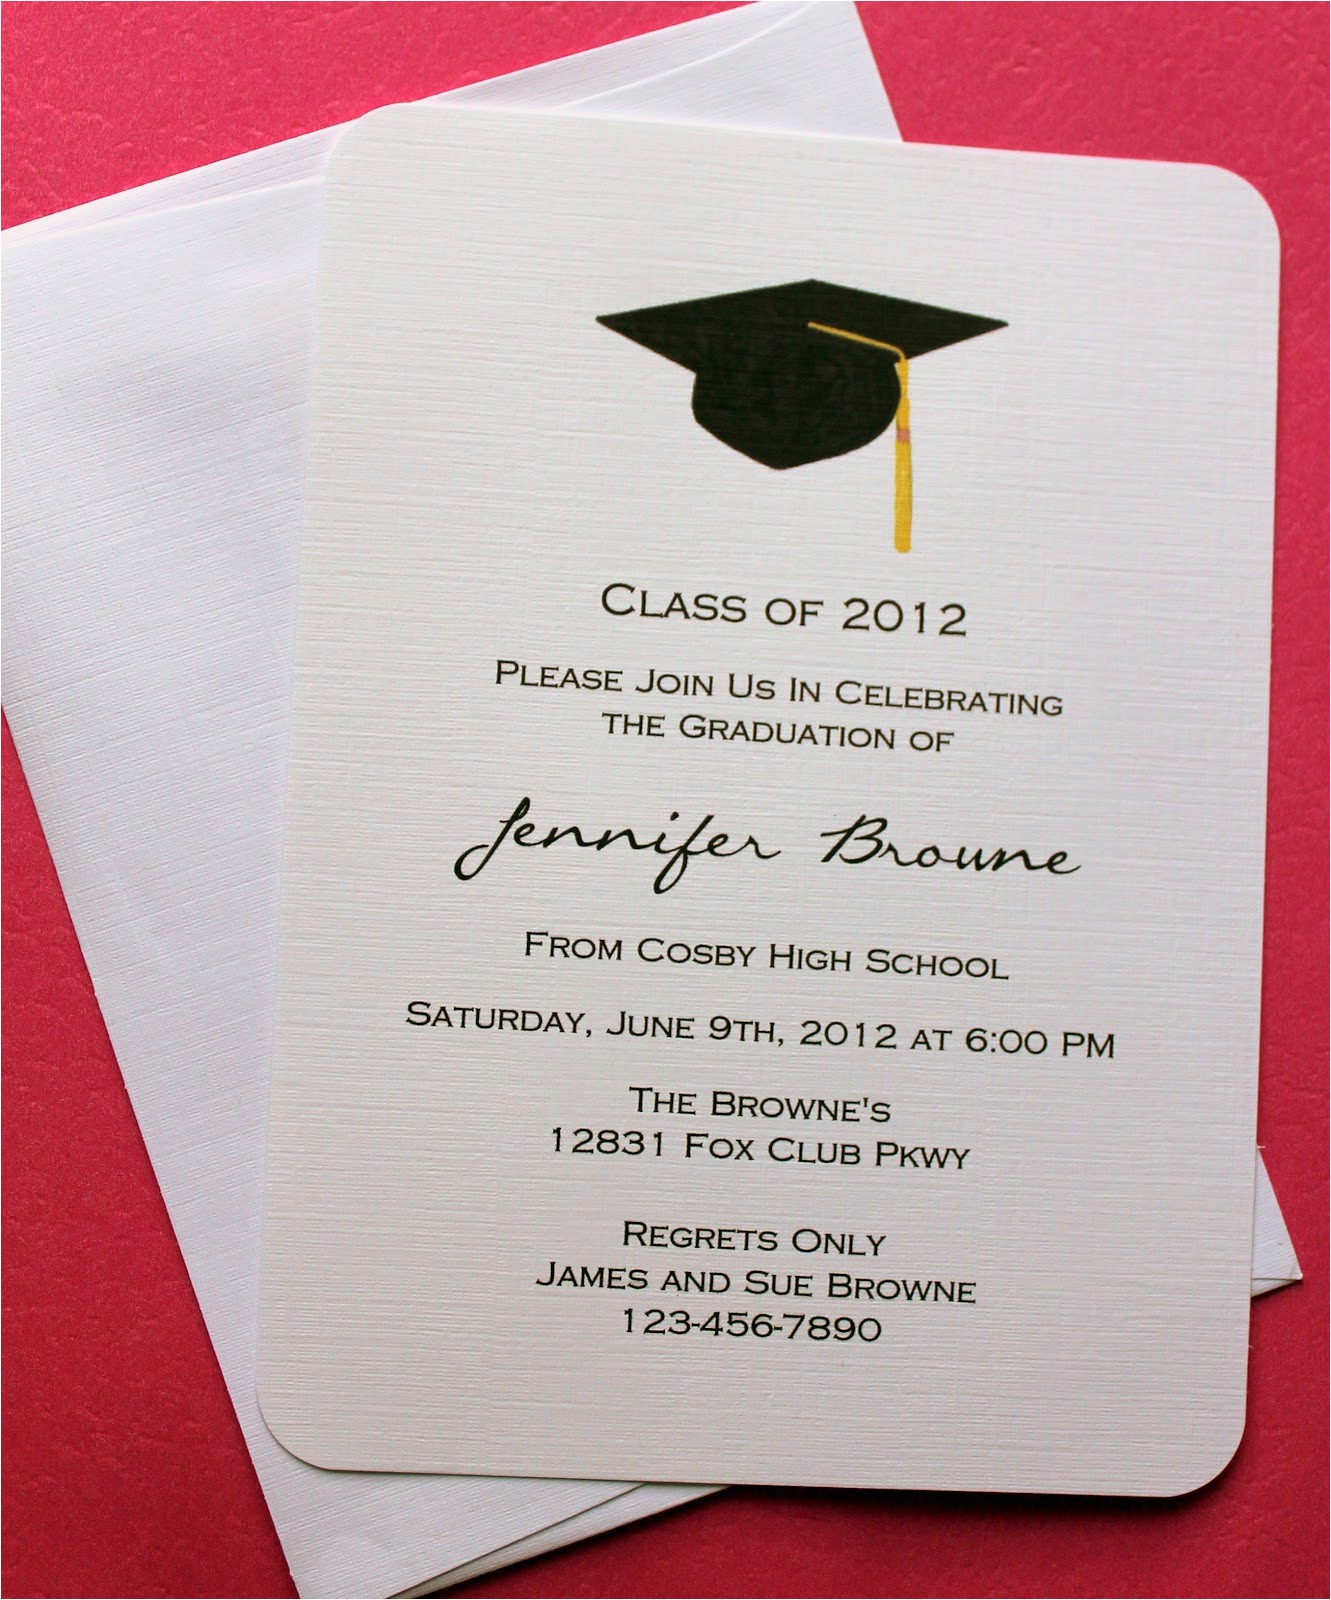 graduation invitation template